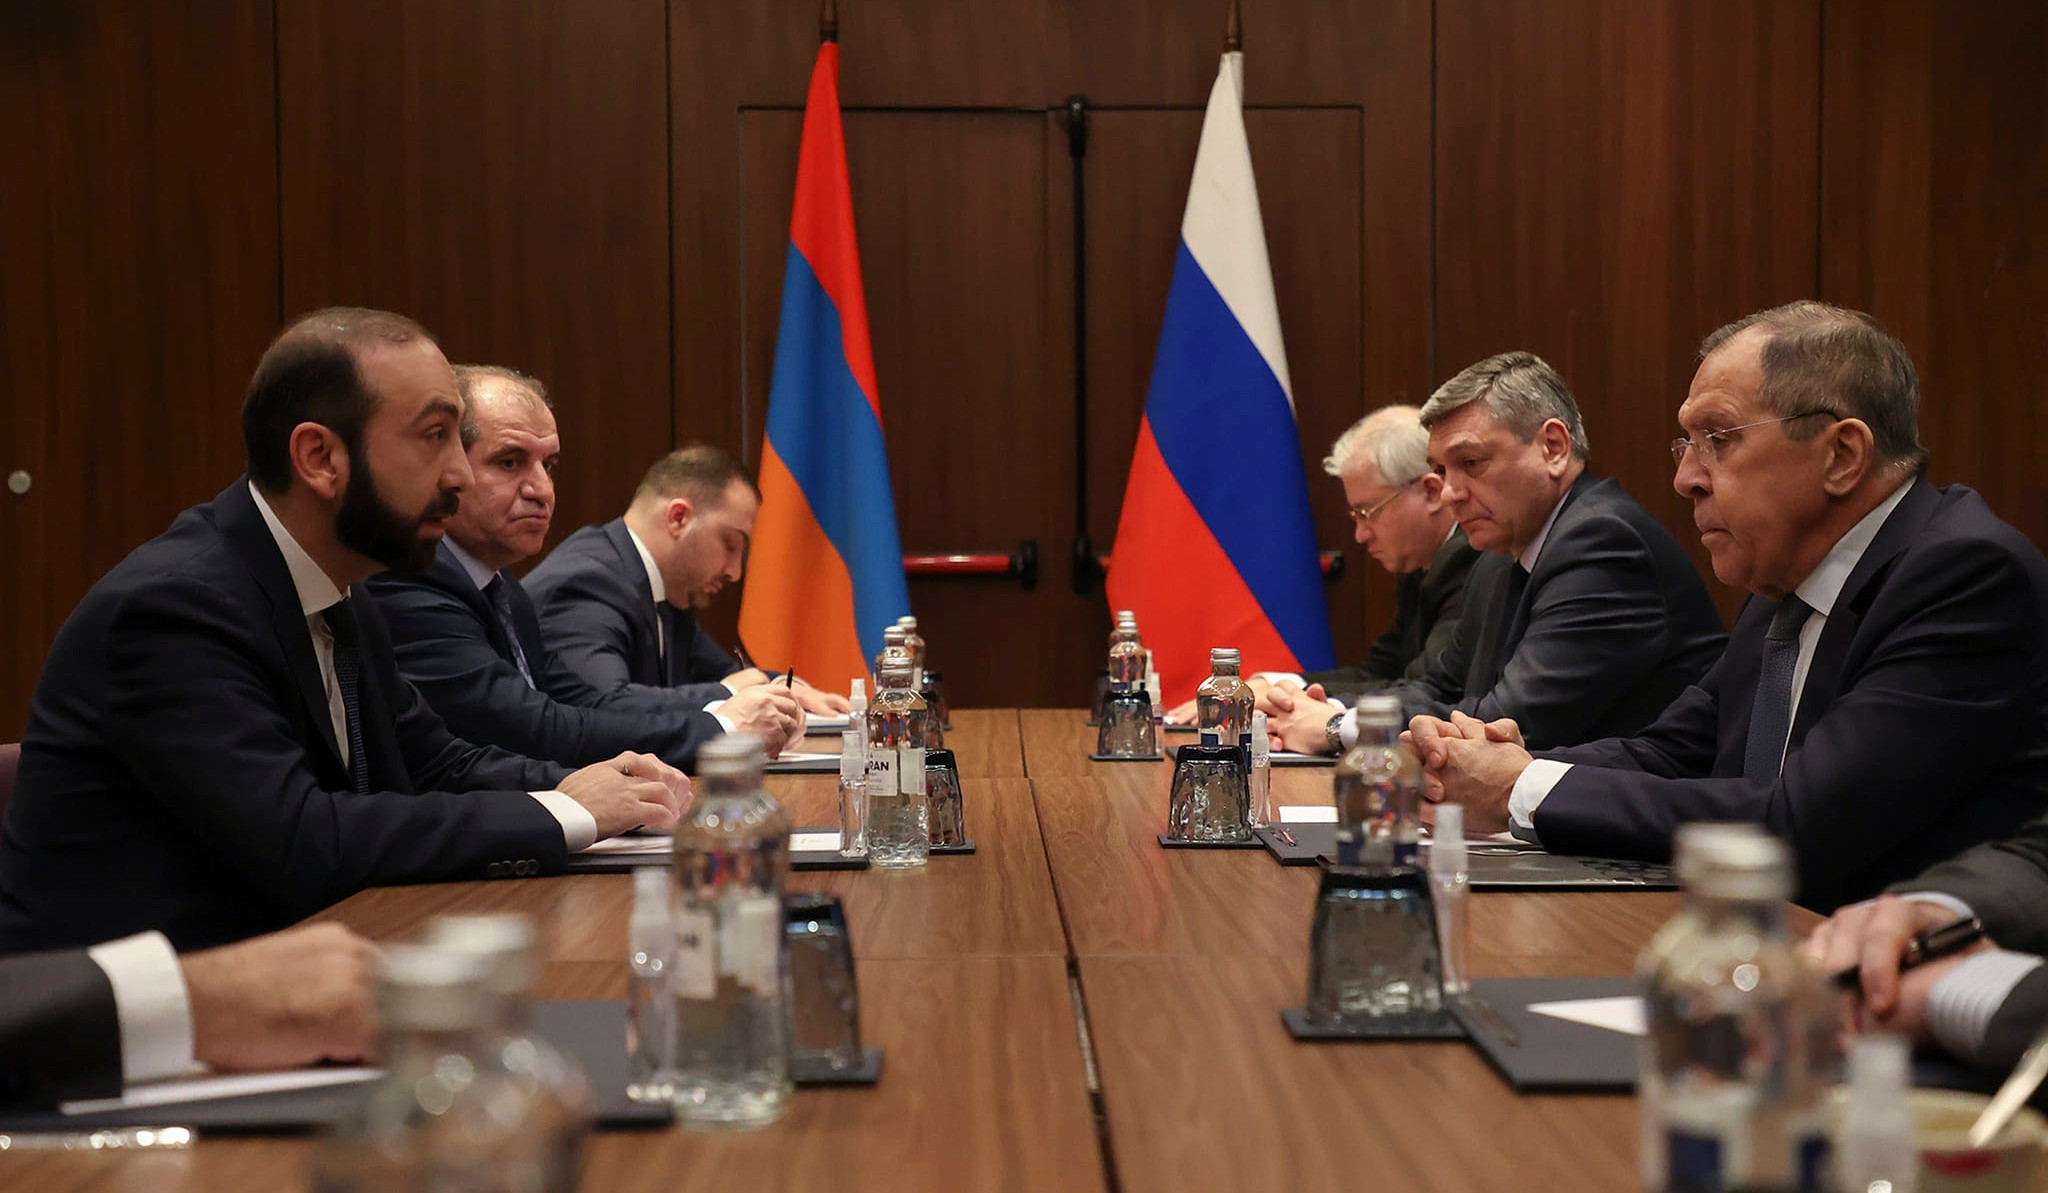 Mirzoyan-Lavrov meeting kicks off in Astana